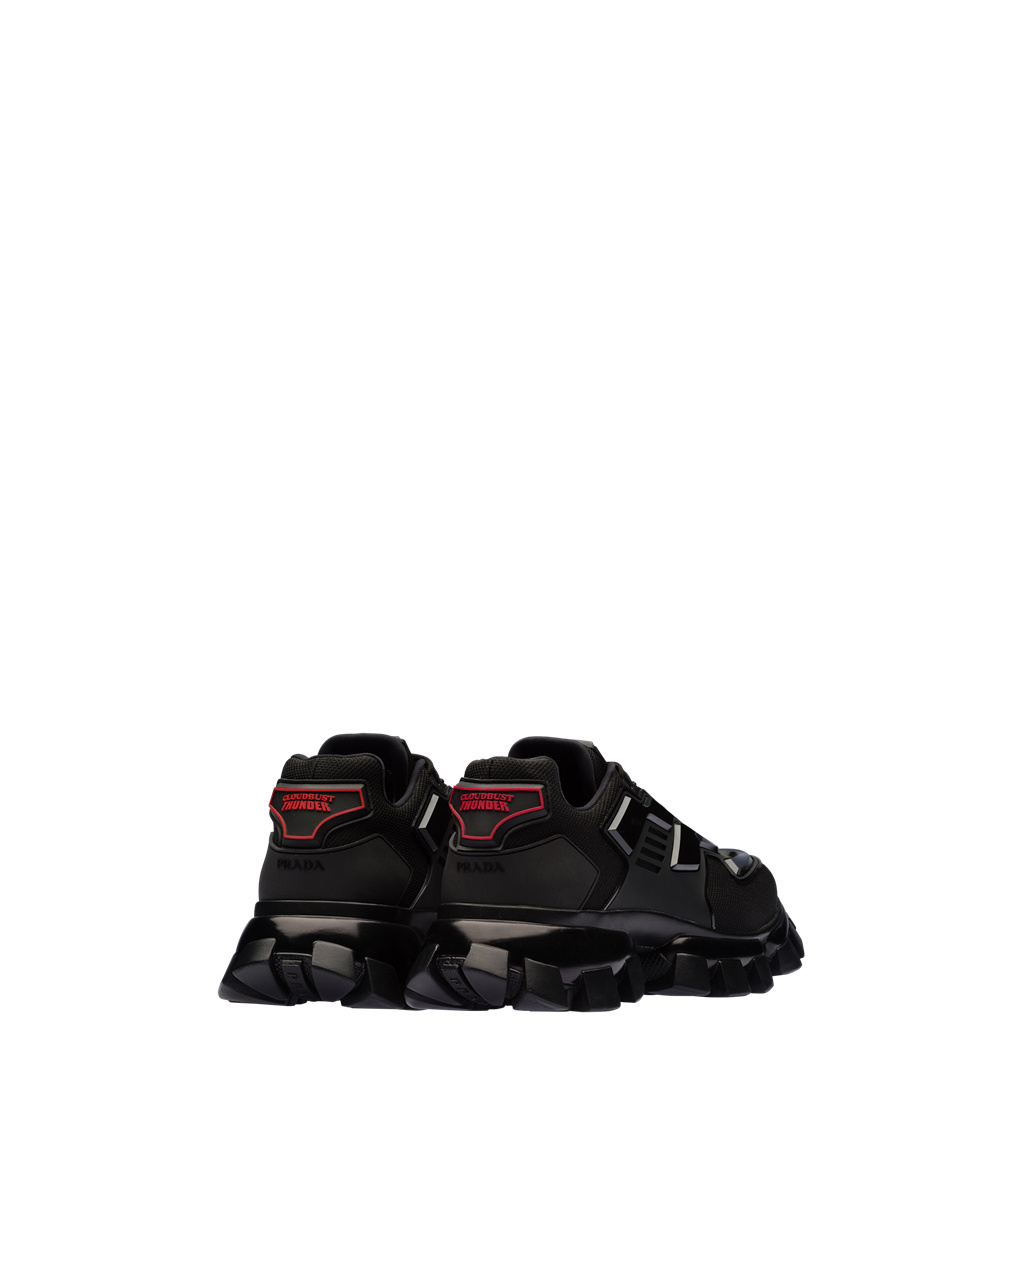 Prada Cloudbust Thunder Technical Fabric Sneakers Black | 6894QZFAI